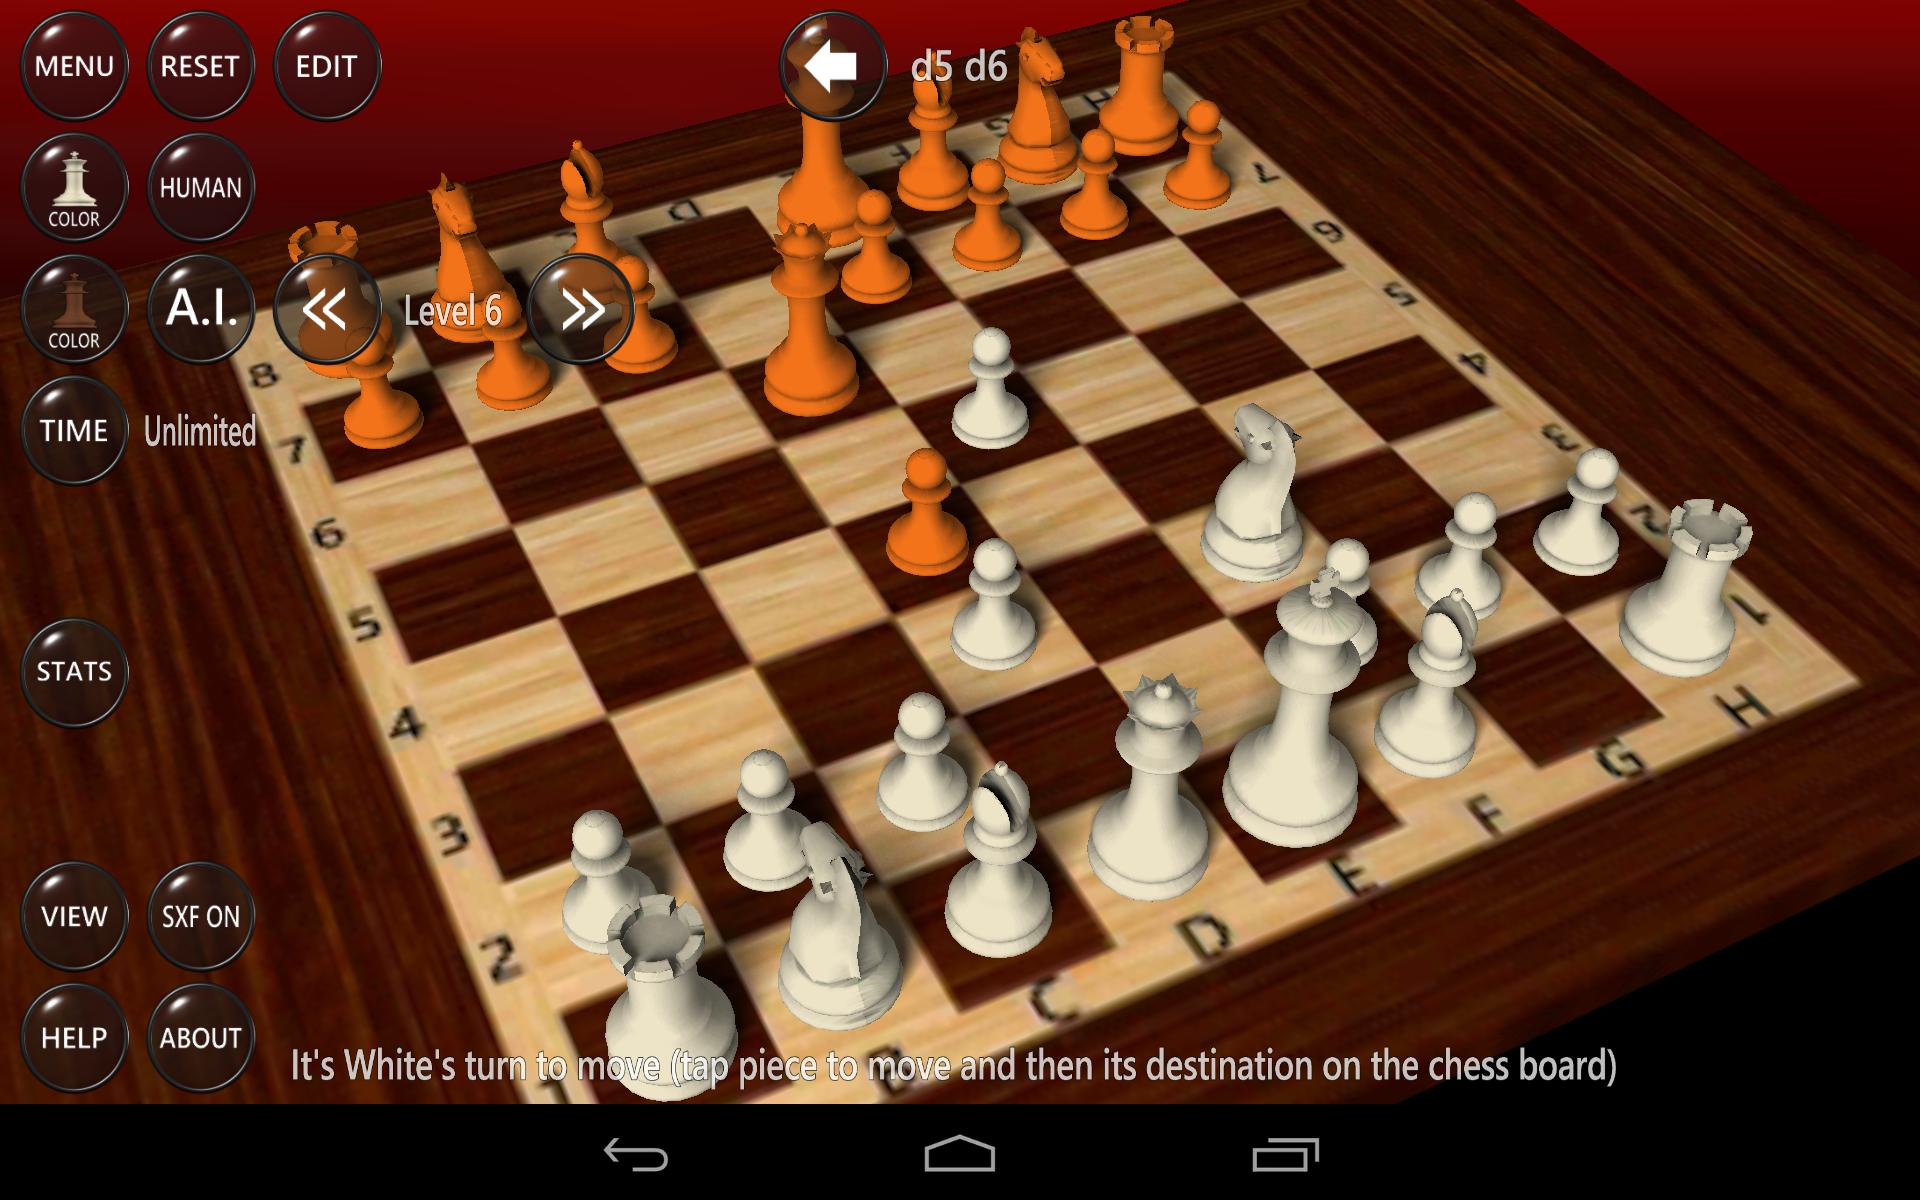 Шахматы 3д на весь экран с компьютером. Шахматы 3d Android. 3d шахматы. Шахматы игра на ПК. Шахматы с компьютером.